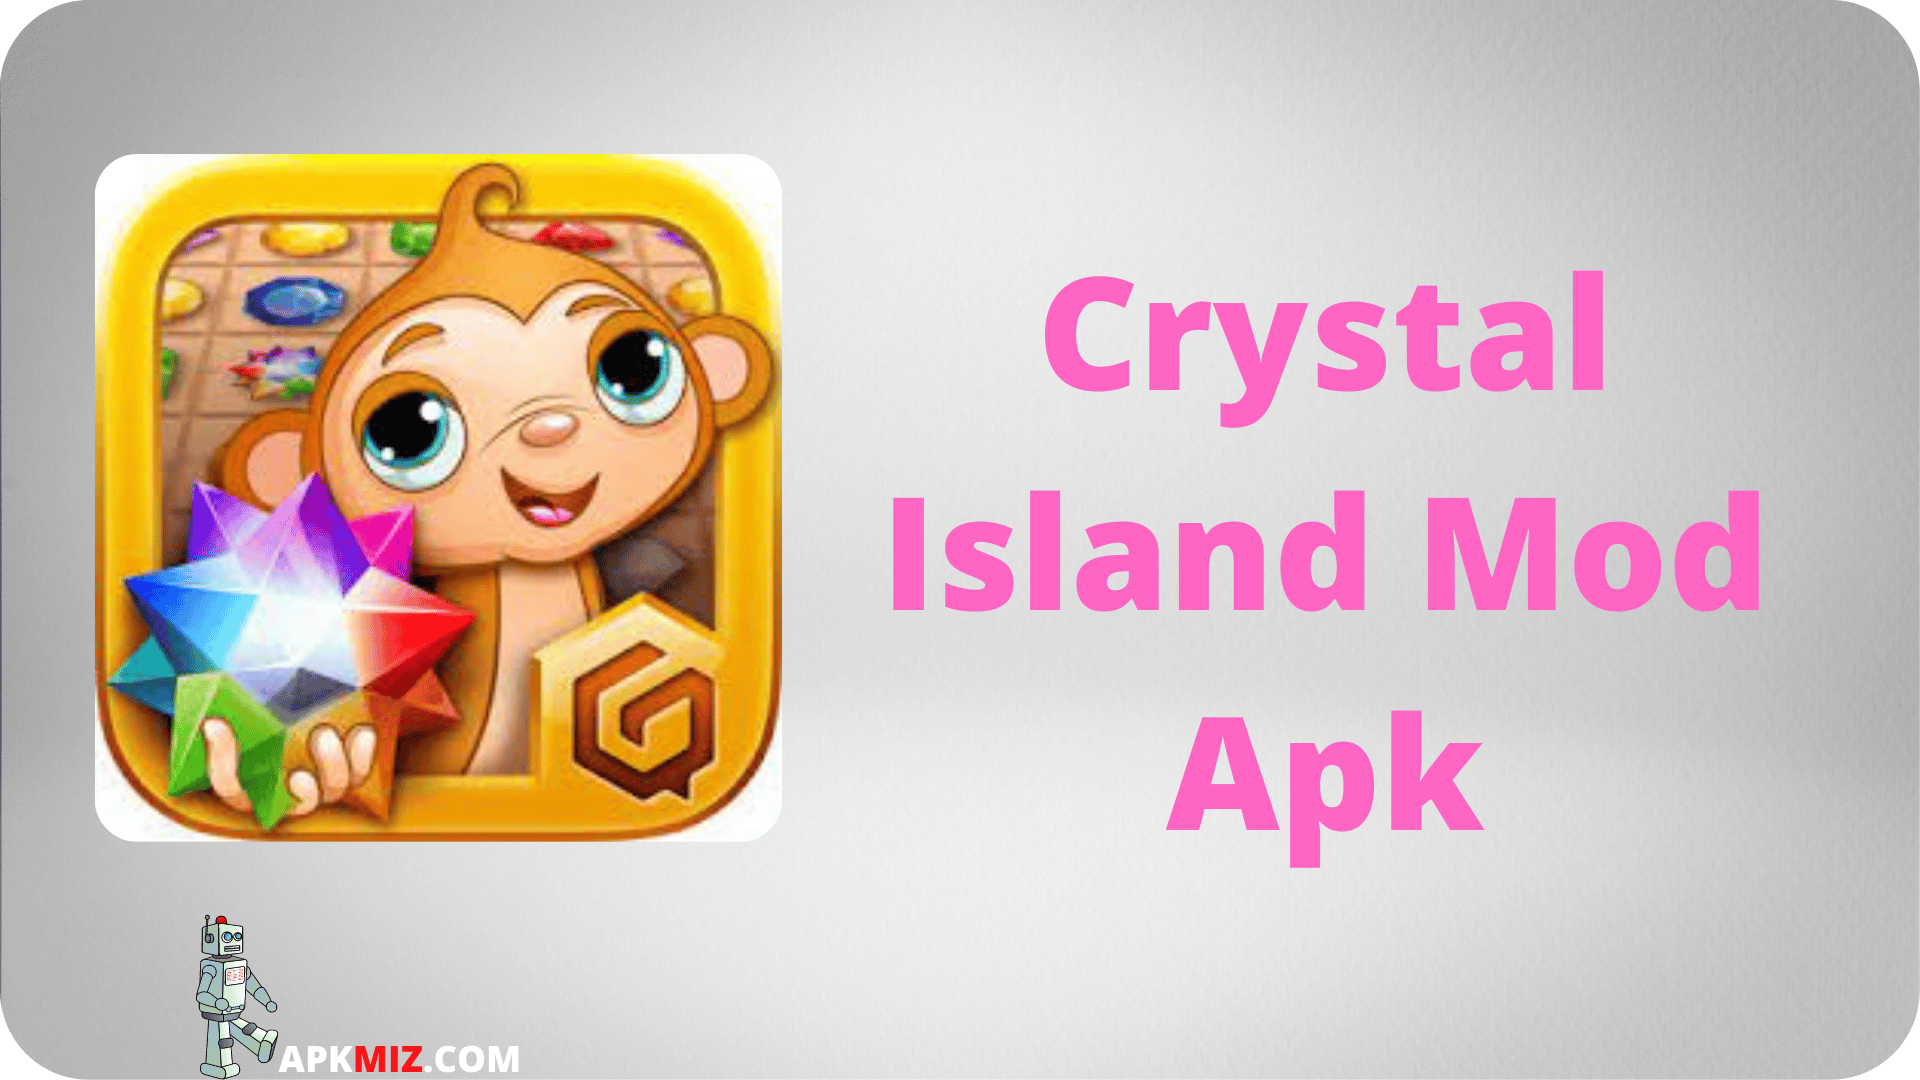 Crystal Island Mod Apk